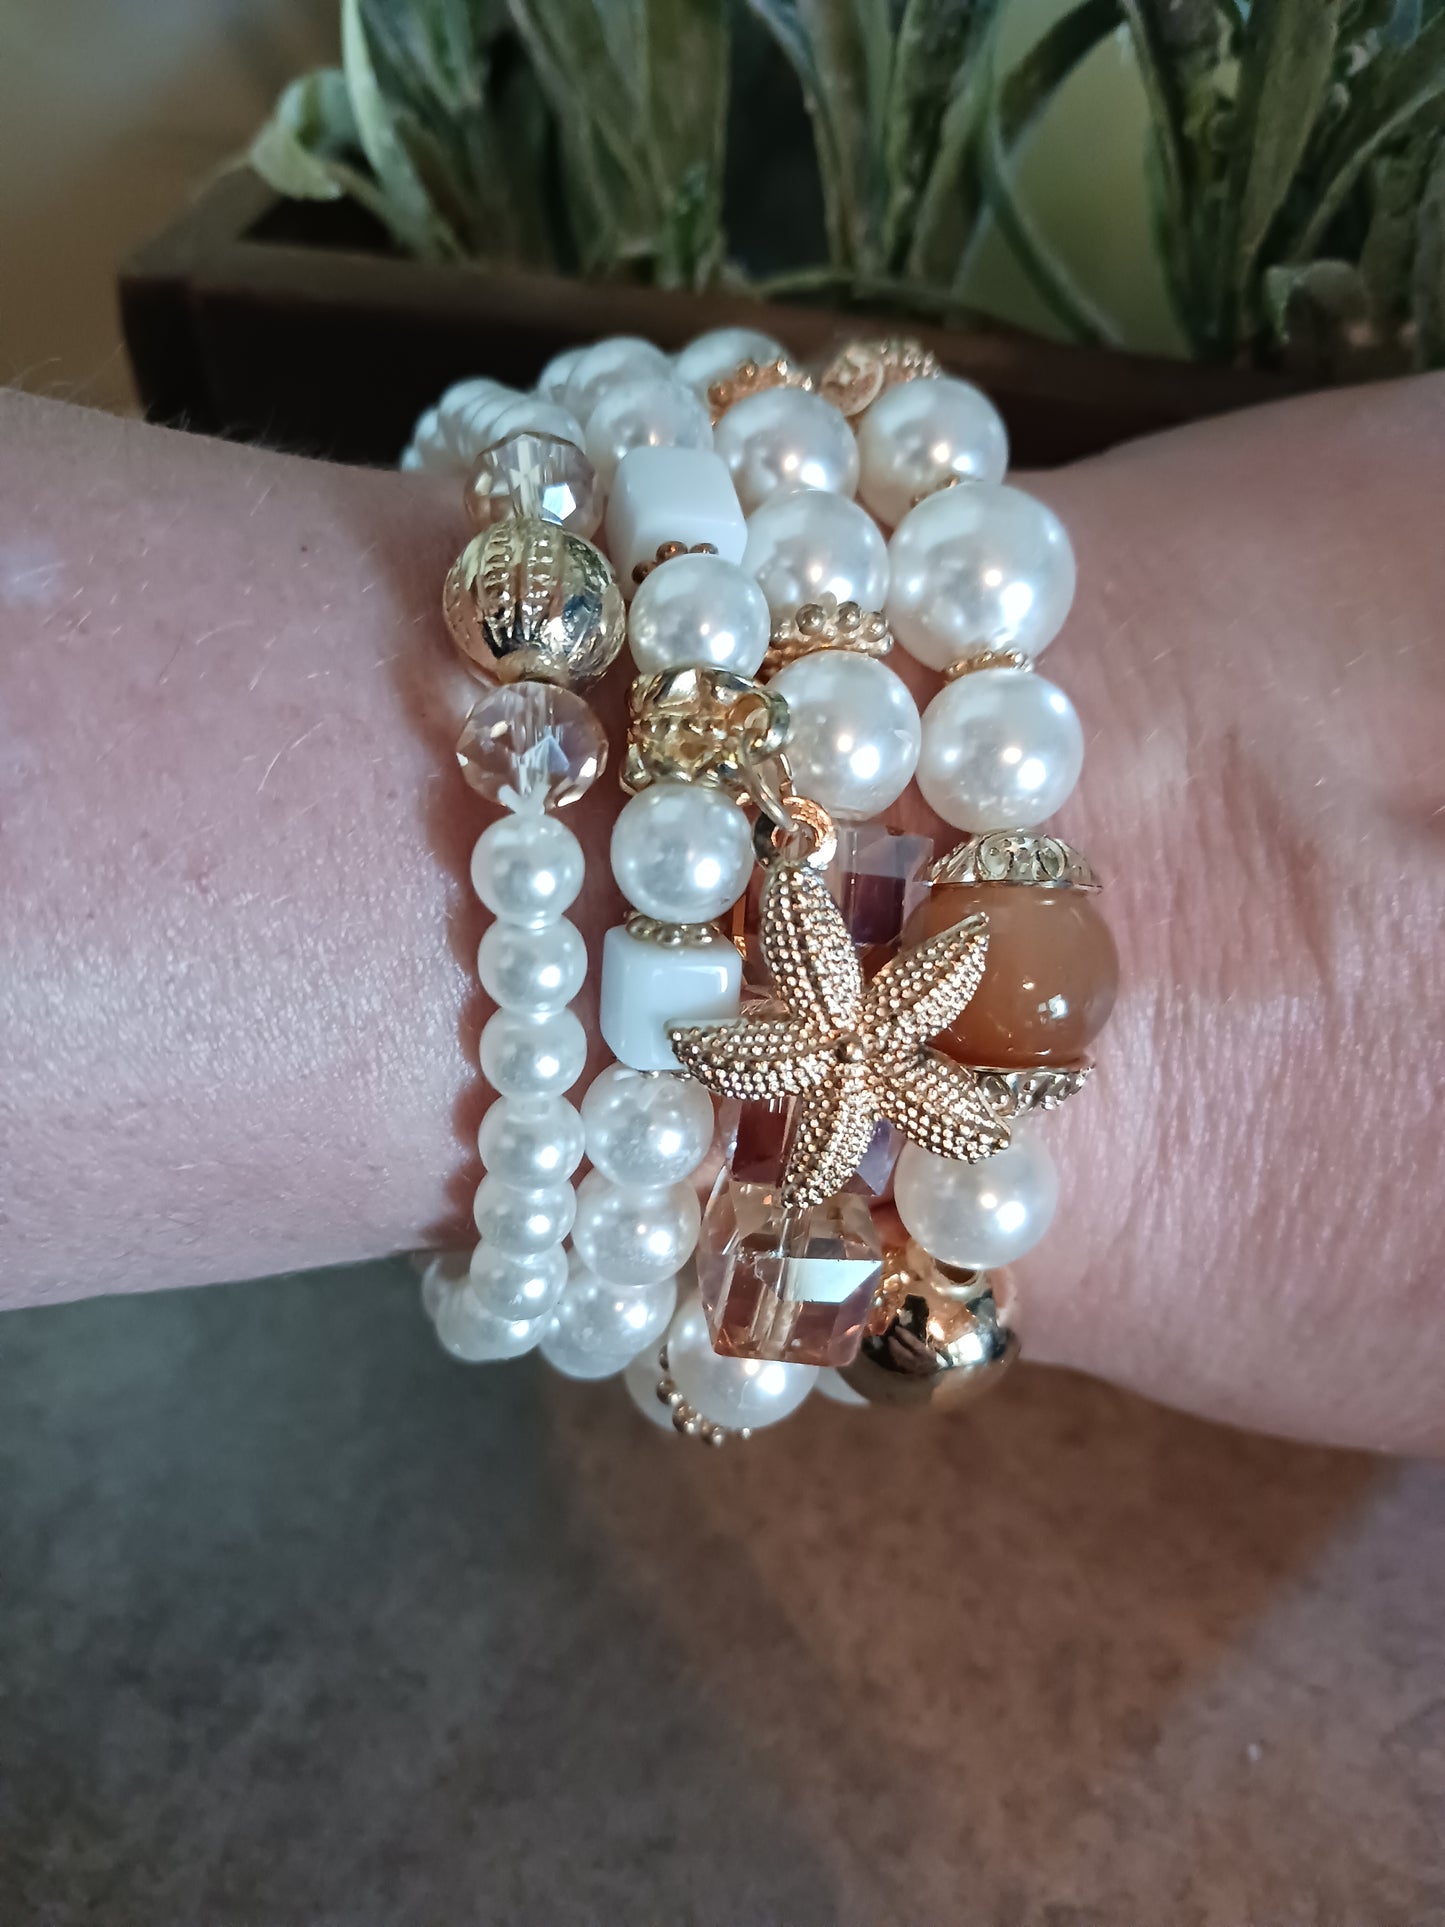 Pearl Stackable Beaded Bracelets